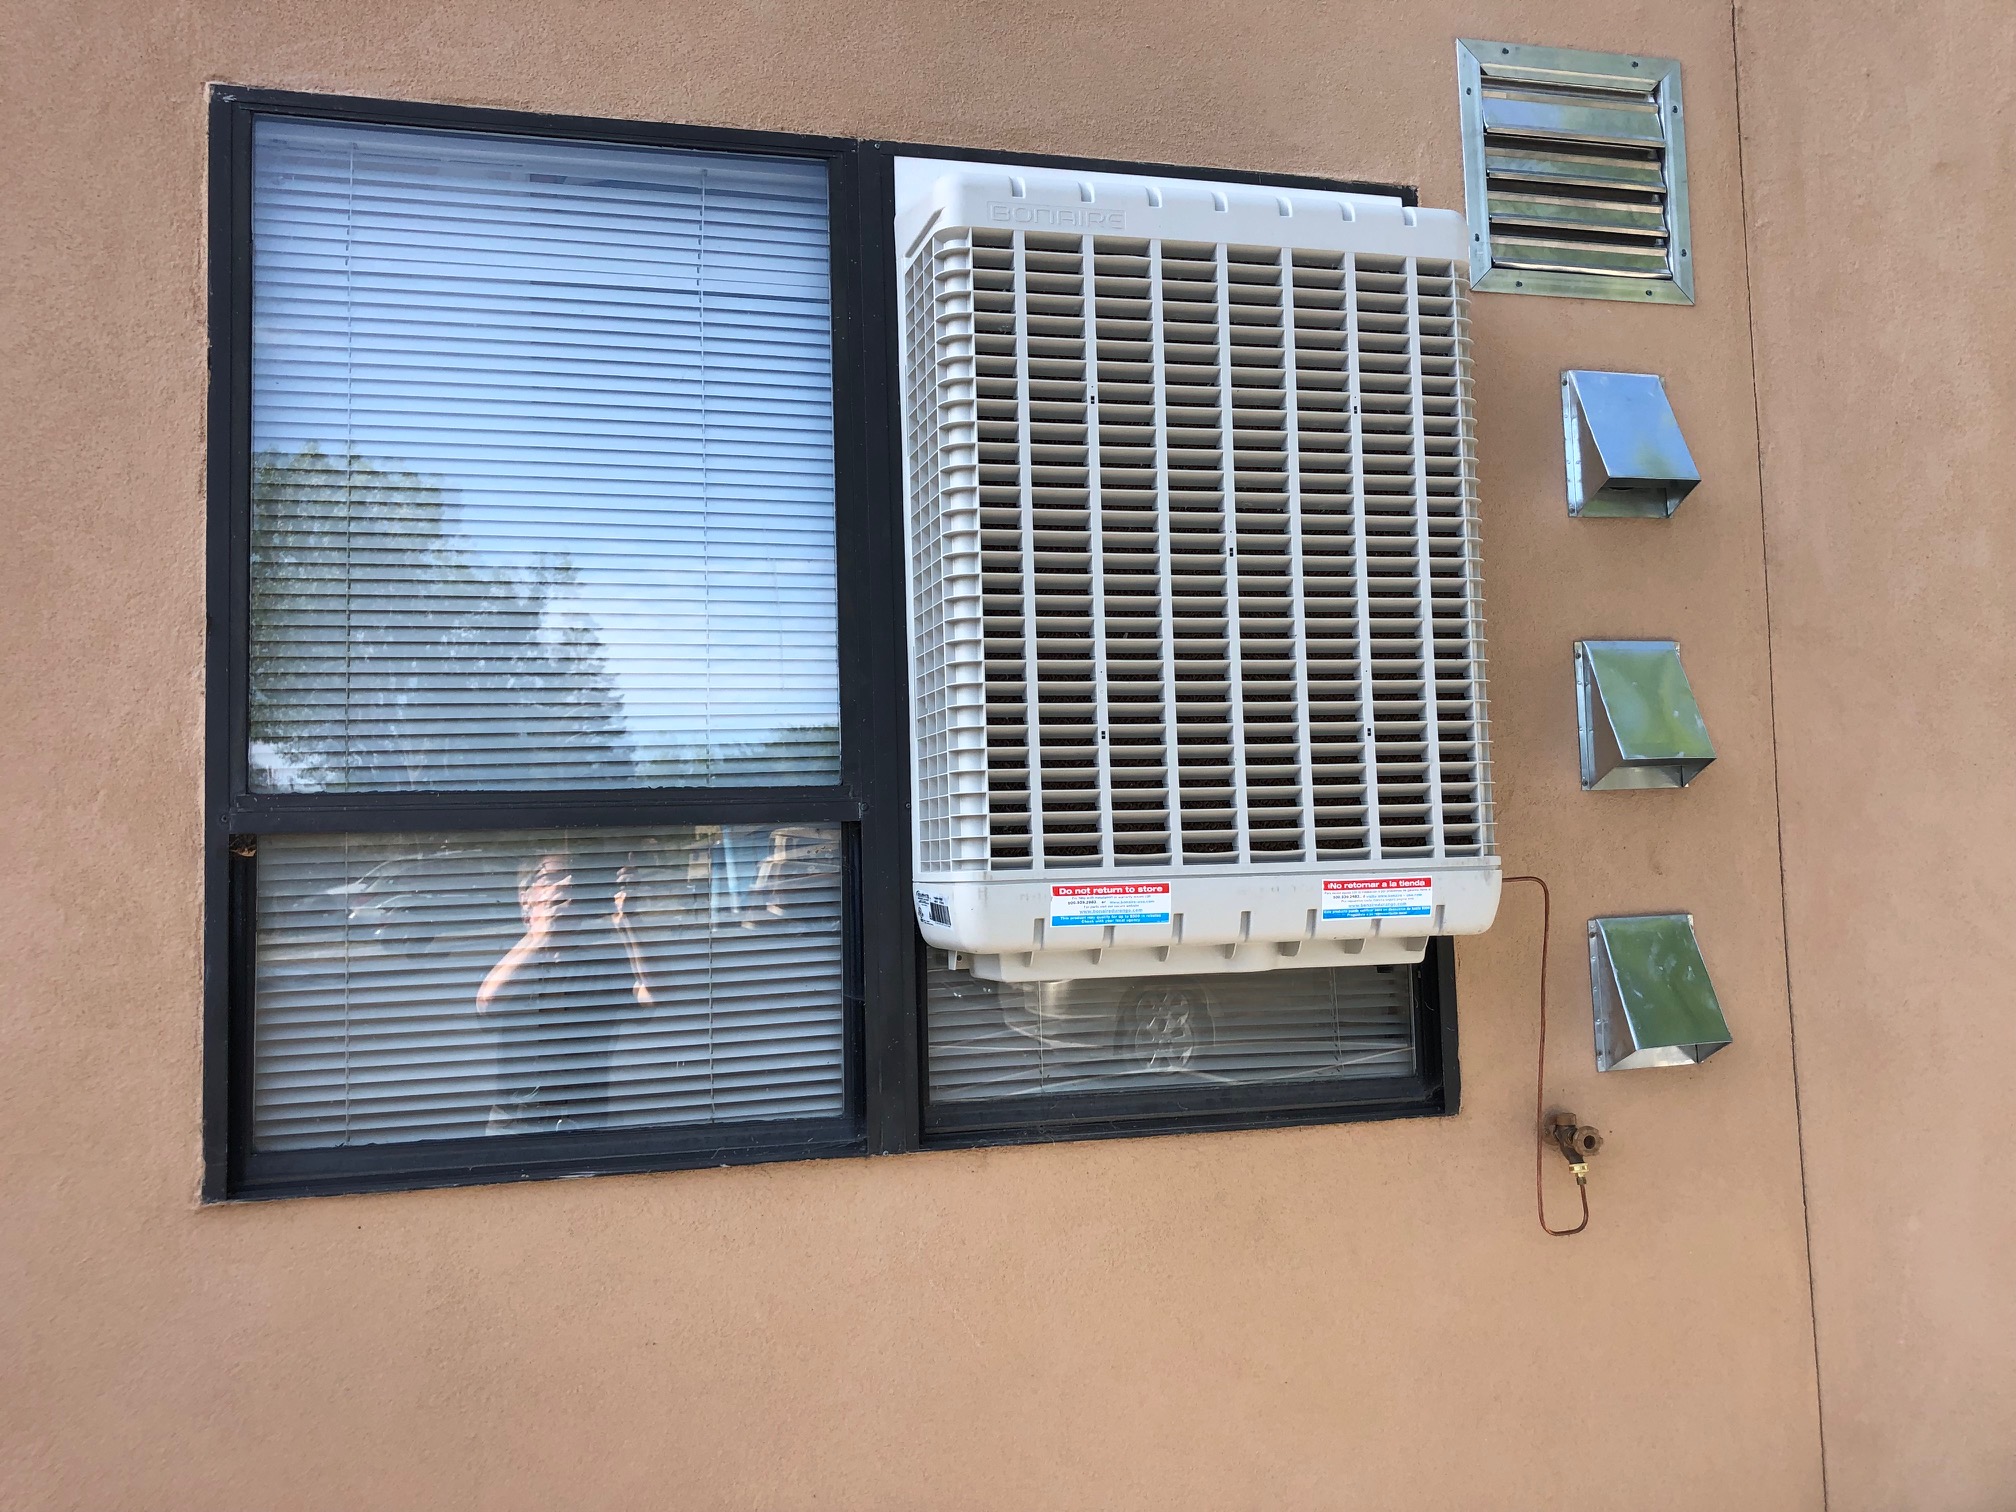 Cooling Equipment Exterior